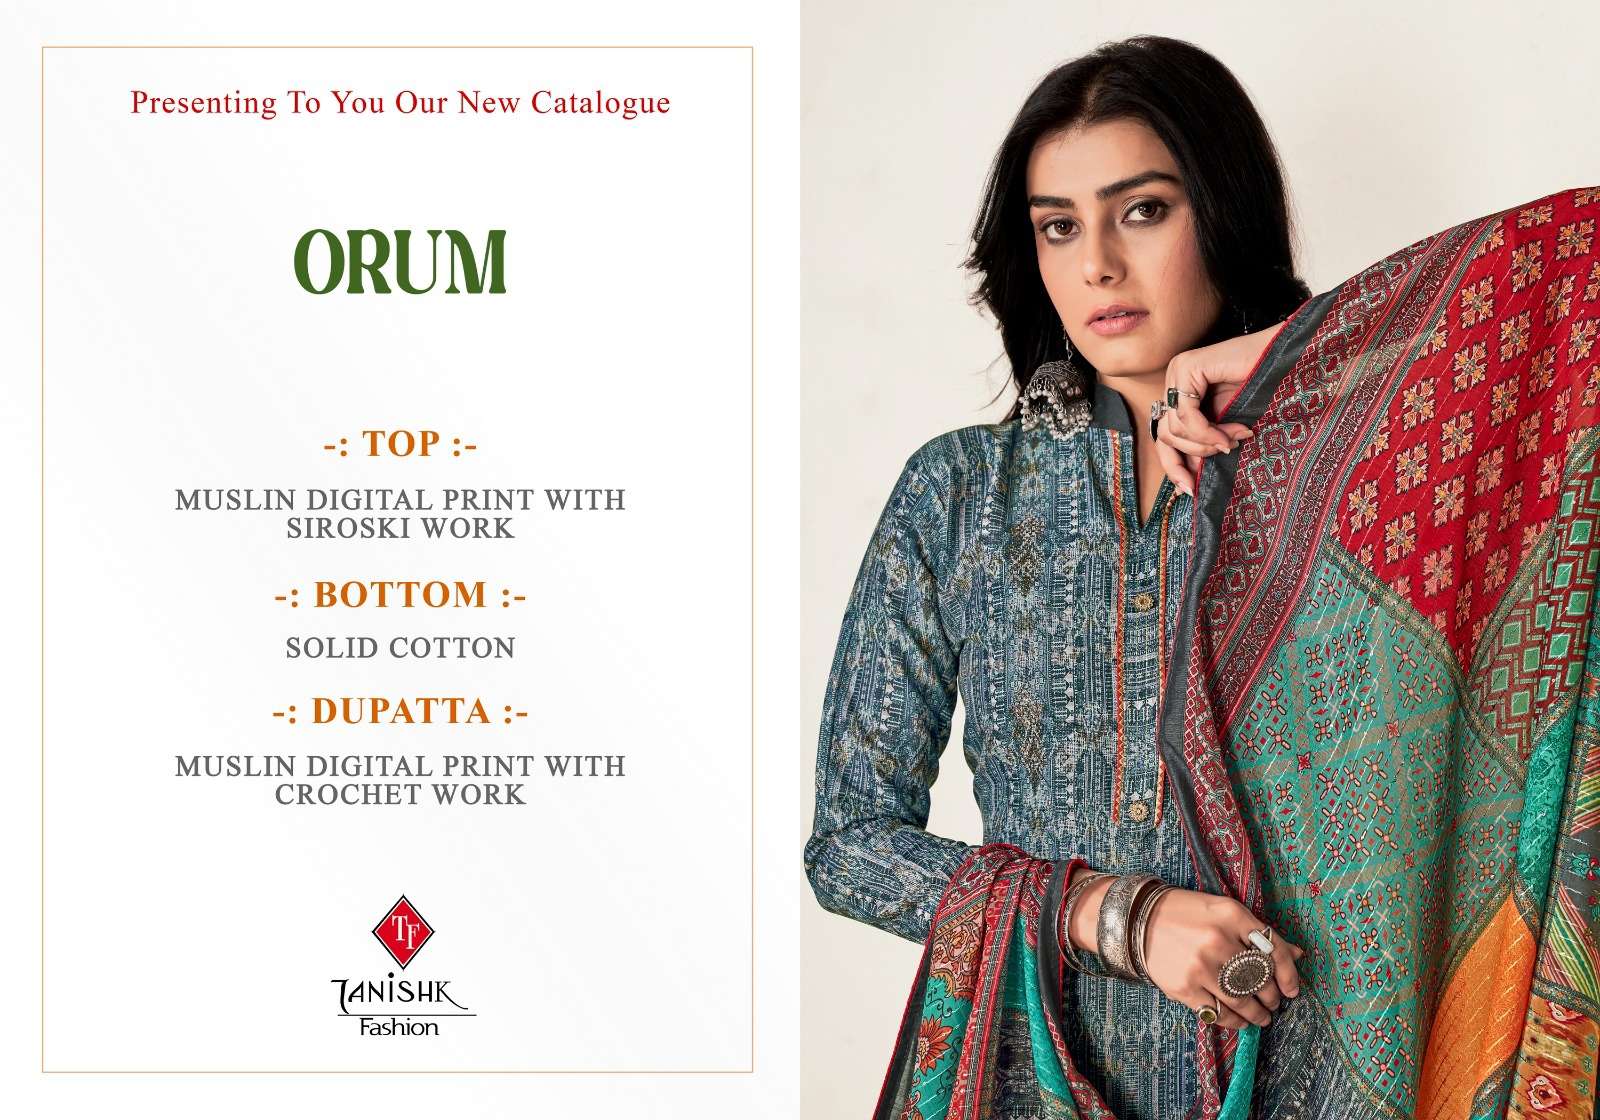 tanishk fashion orum 4501-4506 series unstich designer salwar kameez catalogue wholesale price surat